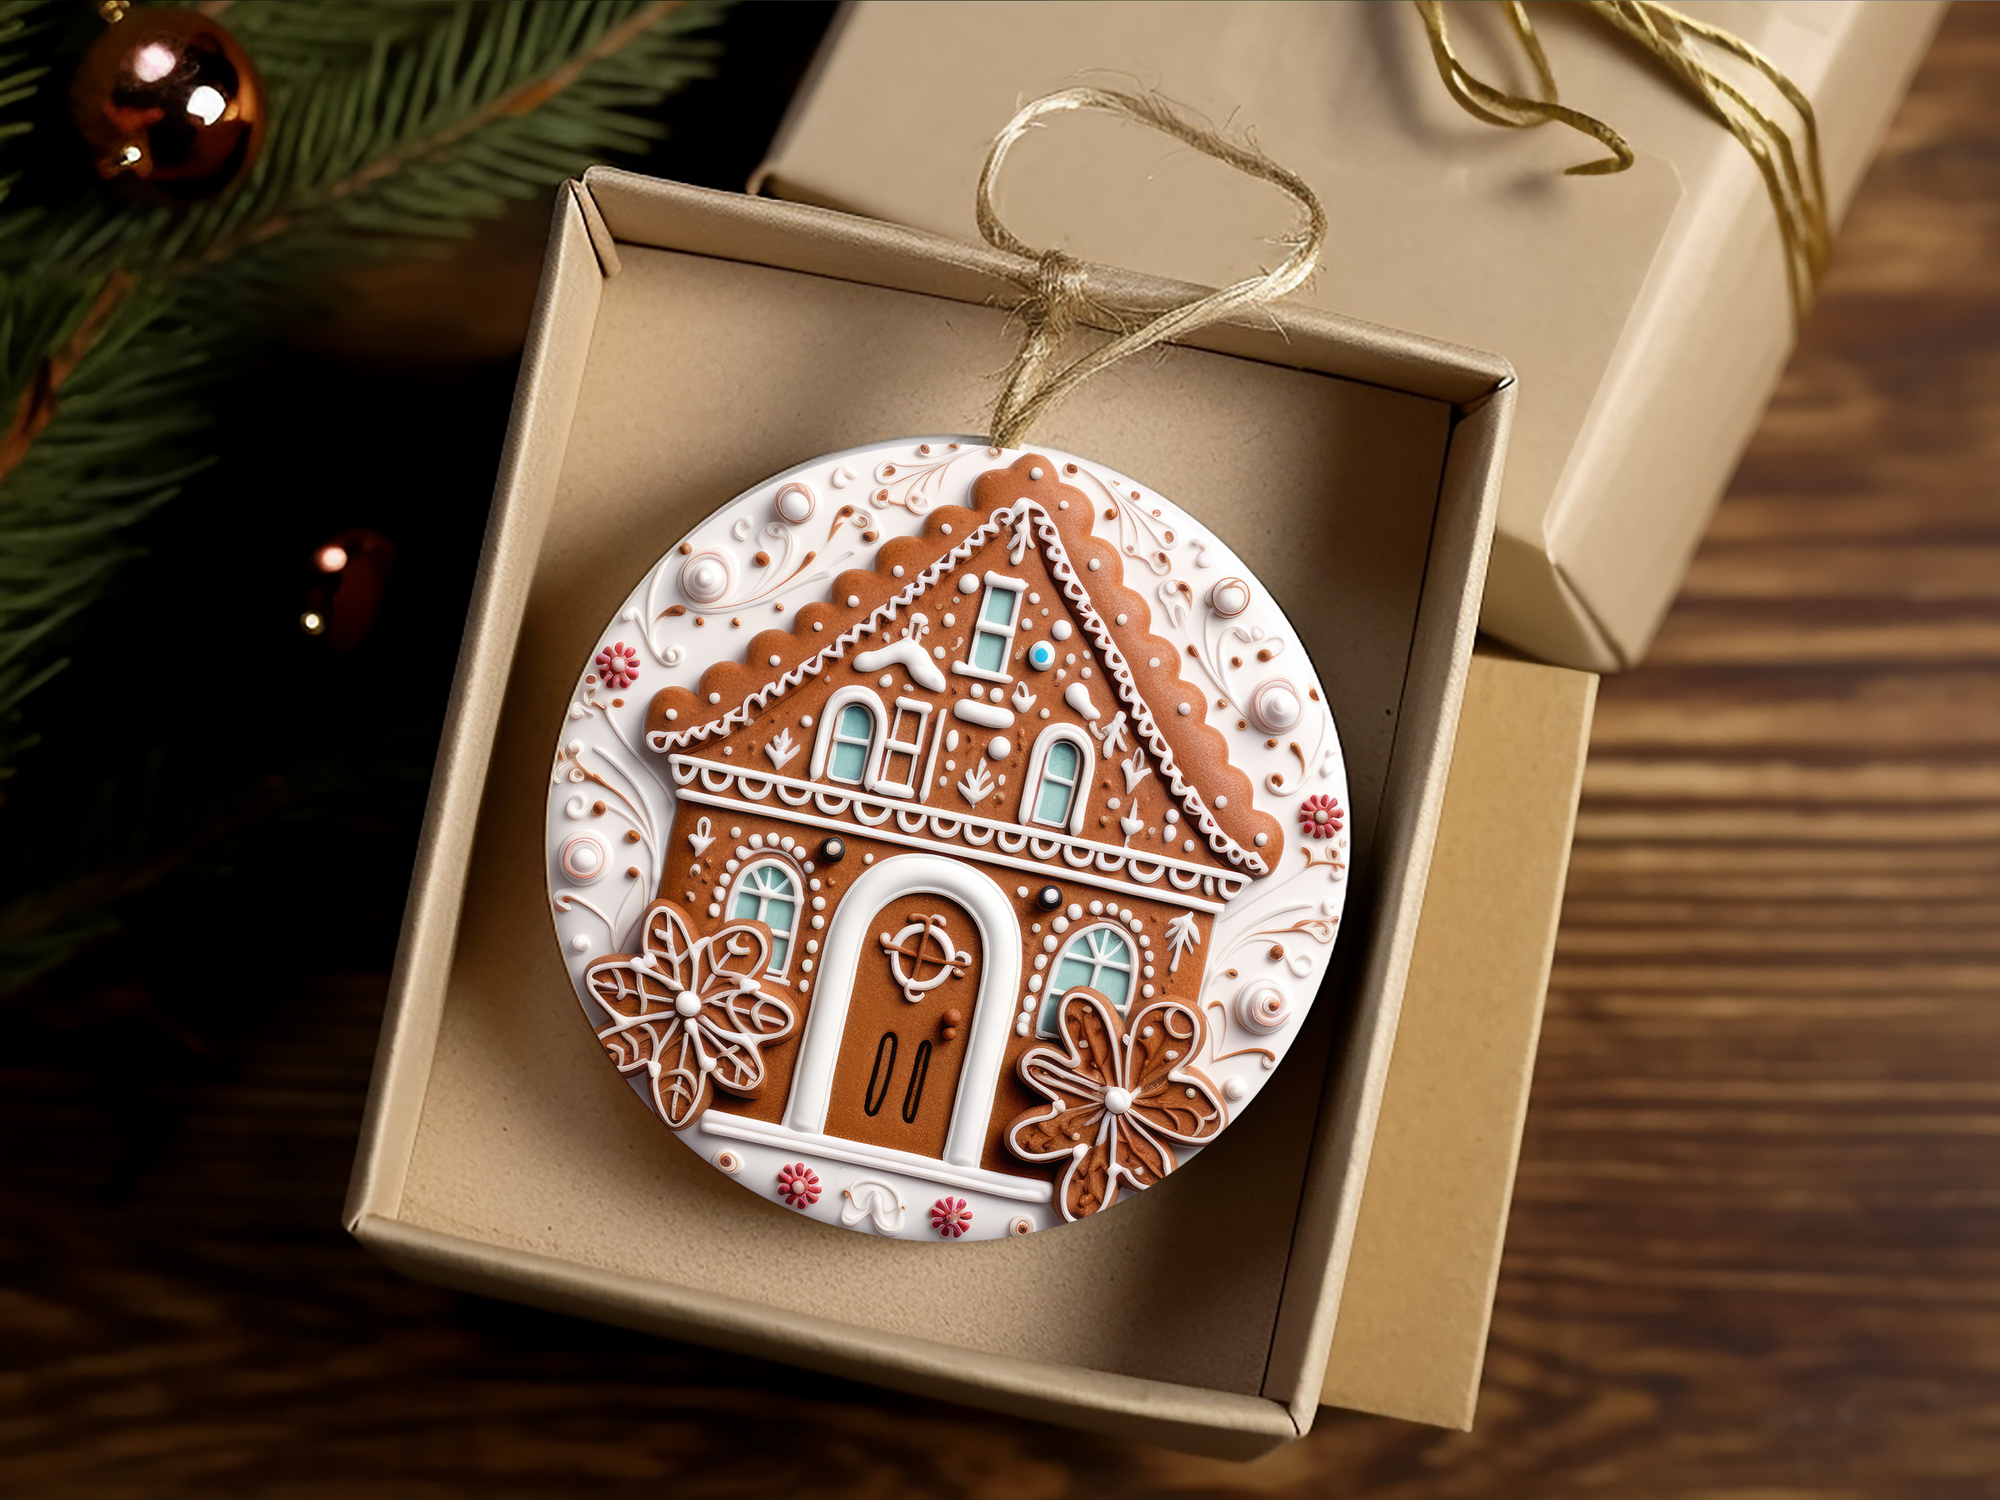 3" Ceramic Ornament Gingerbread Series #417